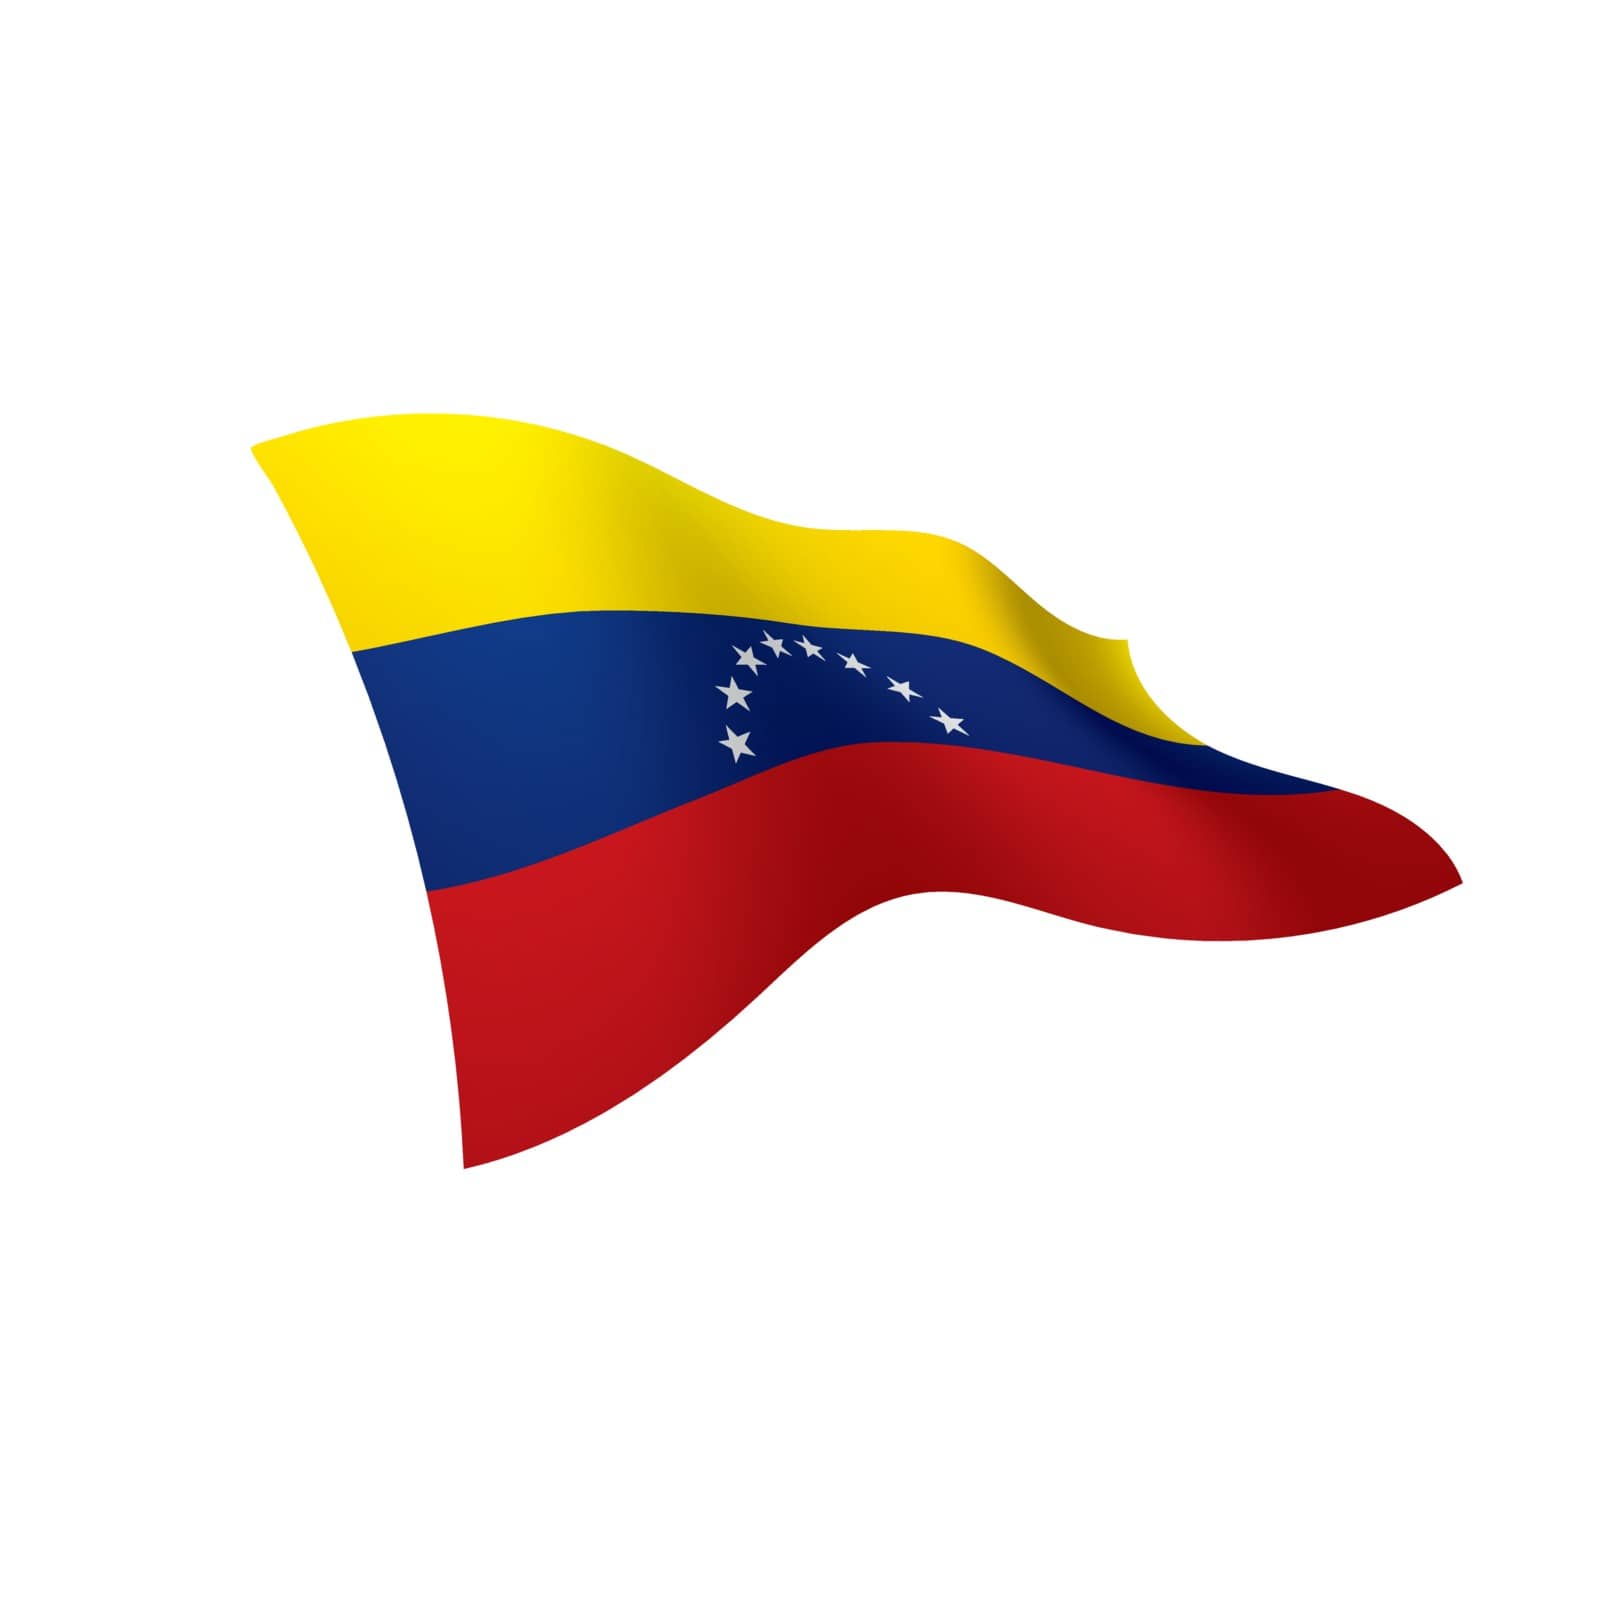 Venezuela flag, vector illustration by butenkow